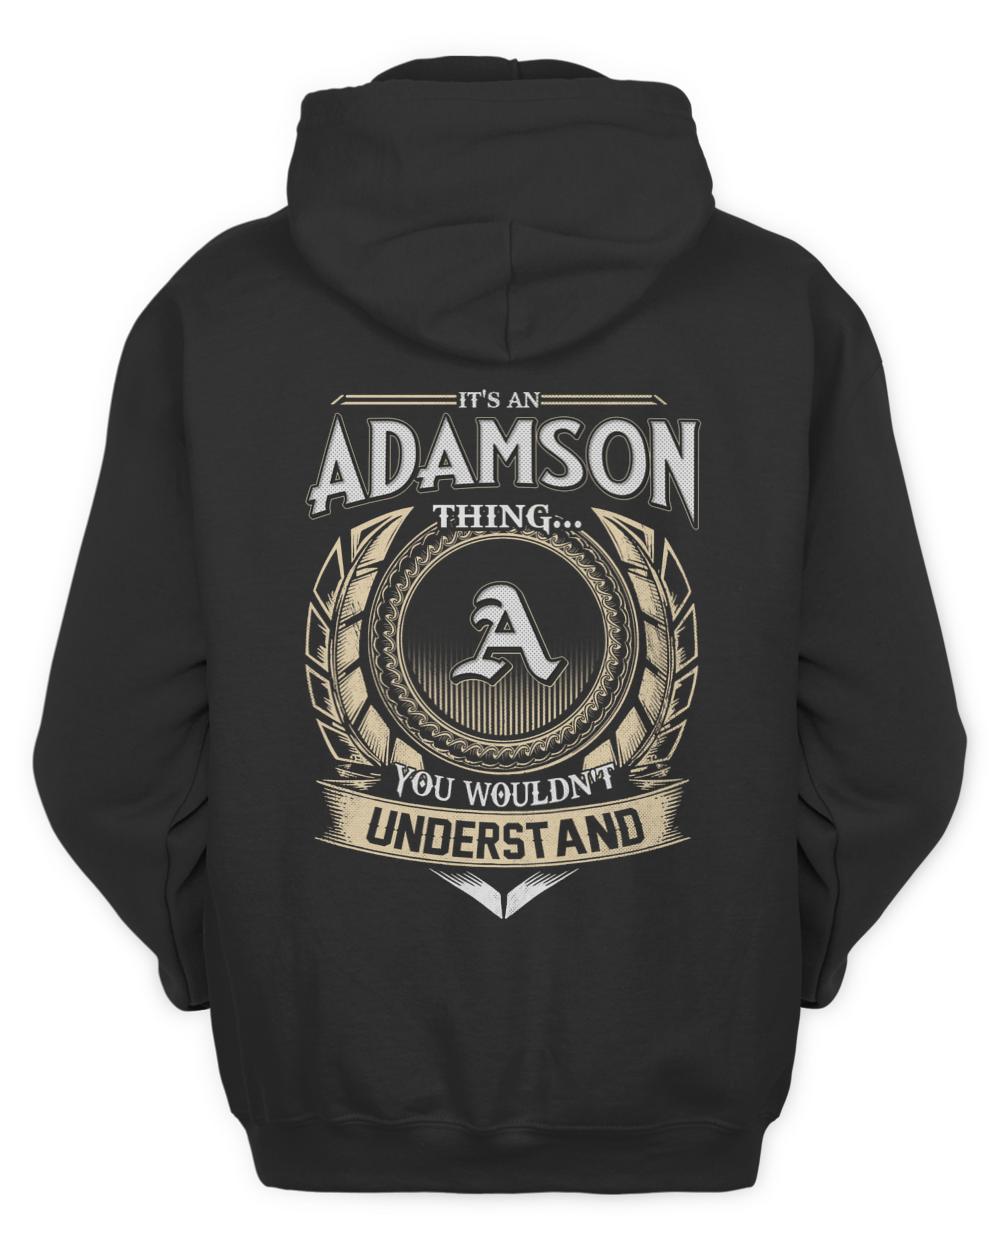 ADAMSON-13K-46-01